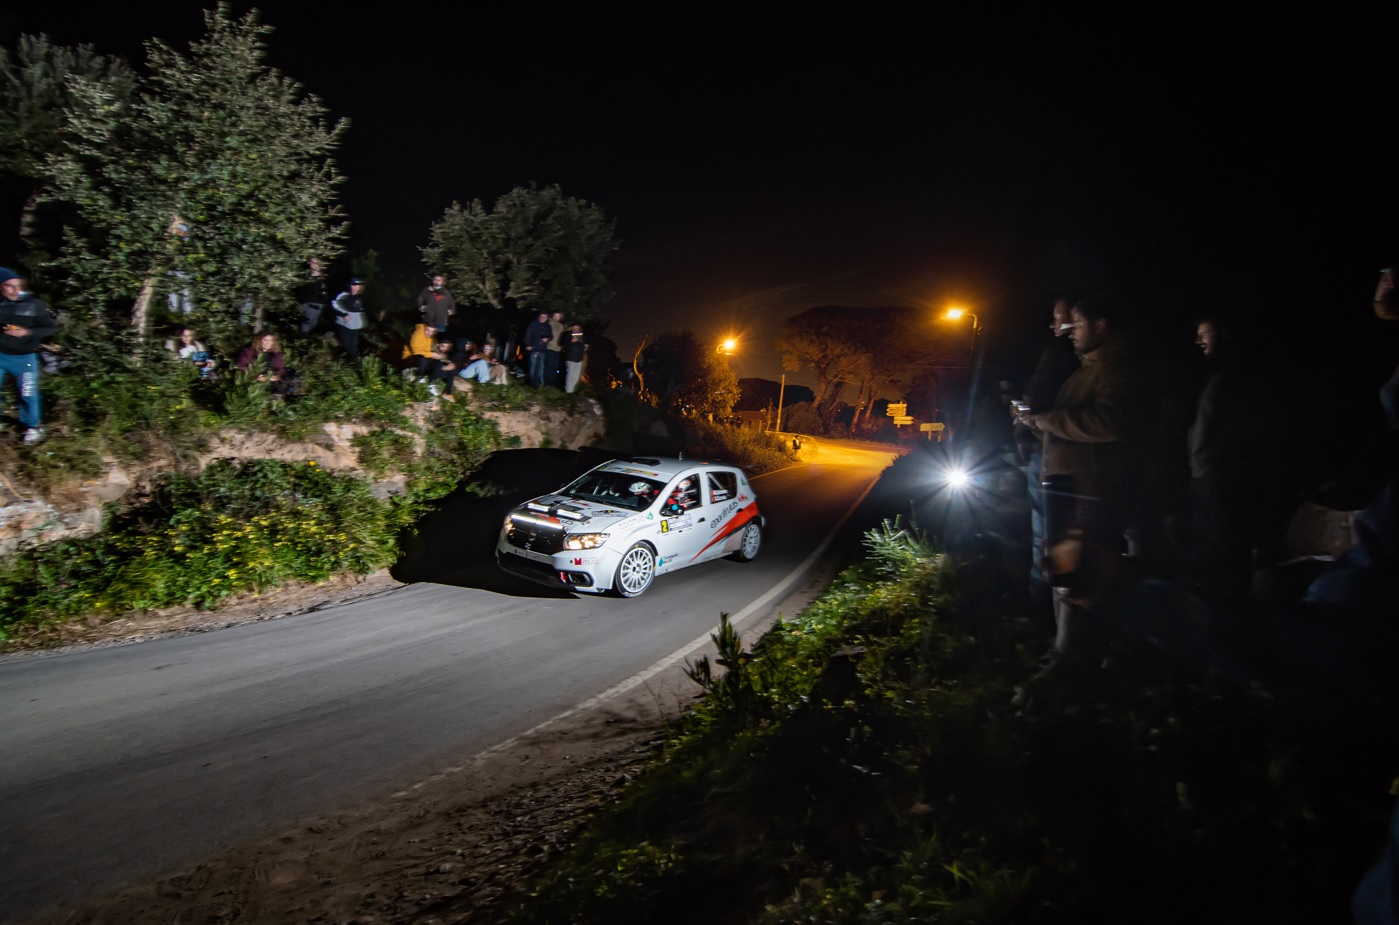 Gil Antunes e Diogo Correia regressam ao pódio no Rallye Das Camélias! 16